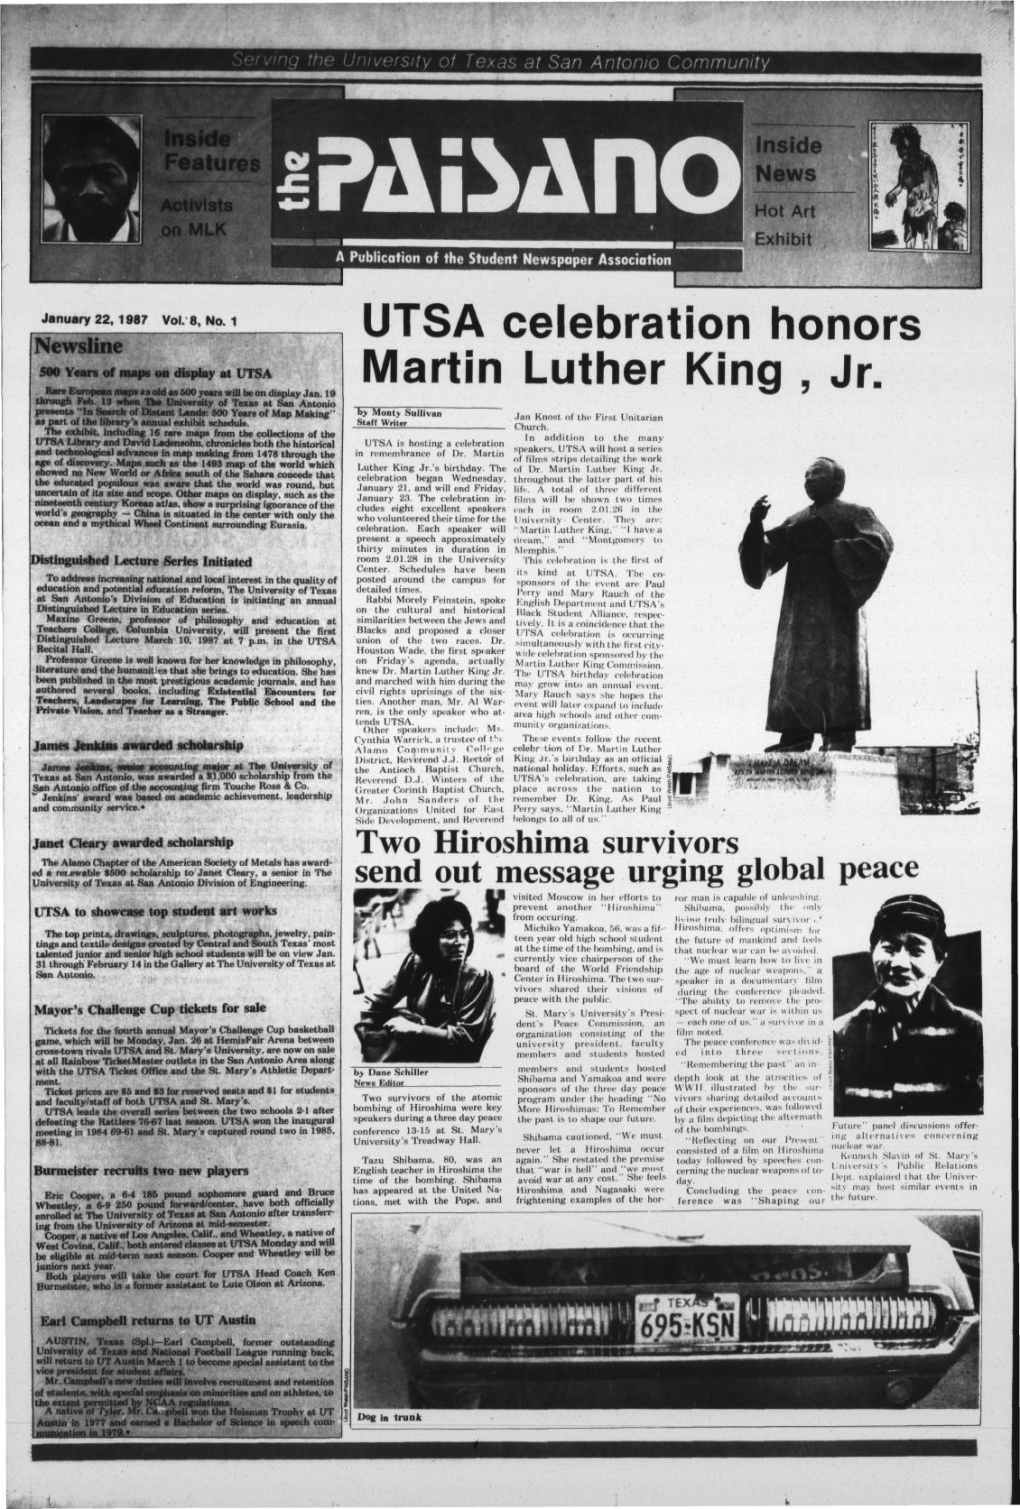 UTSA Celebration Honors Martin Luther King